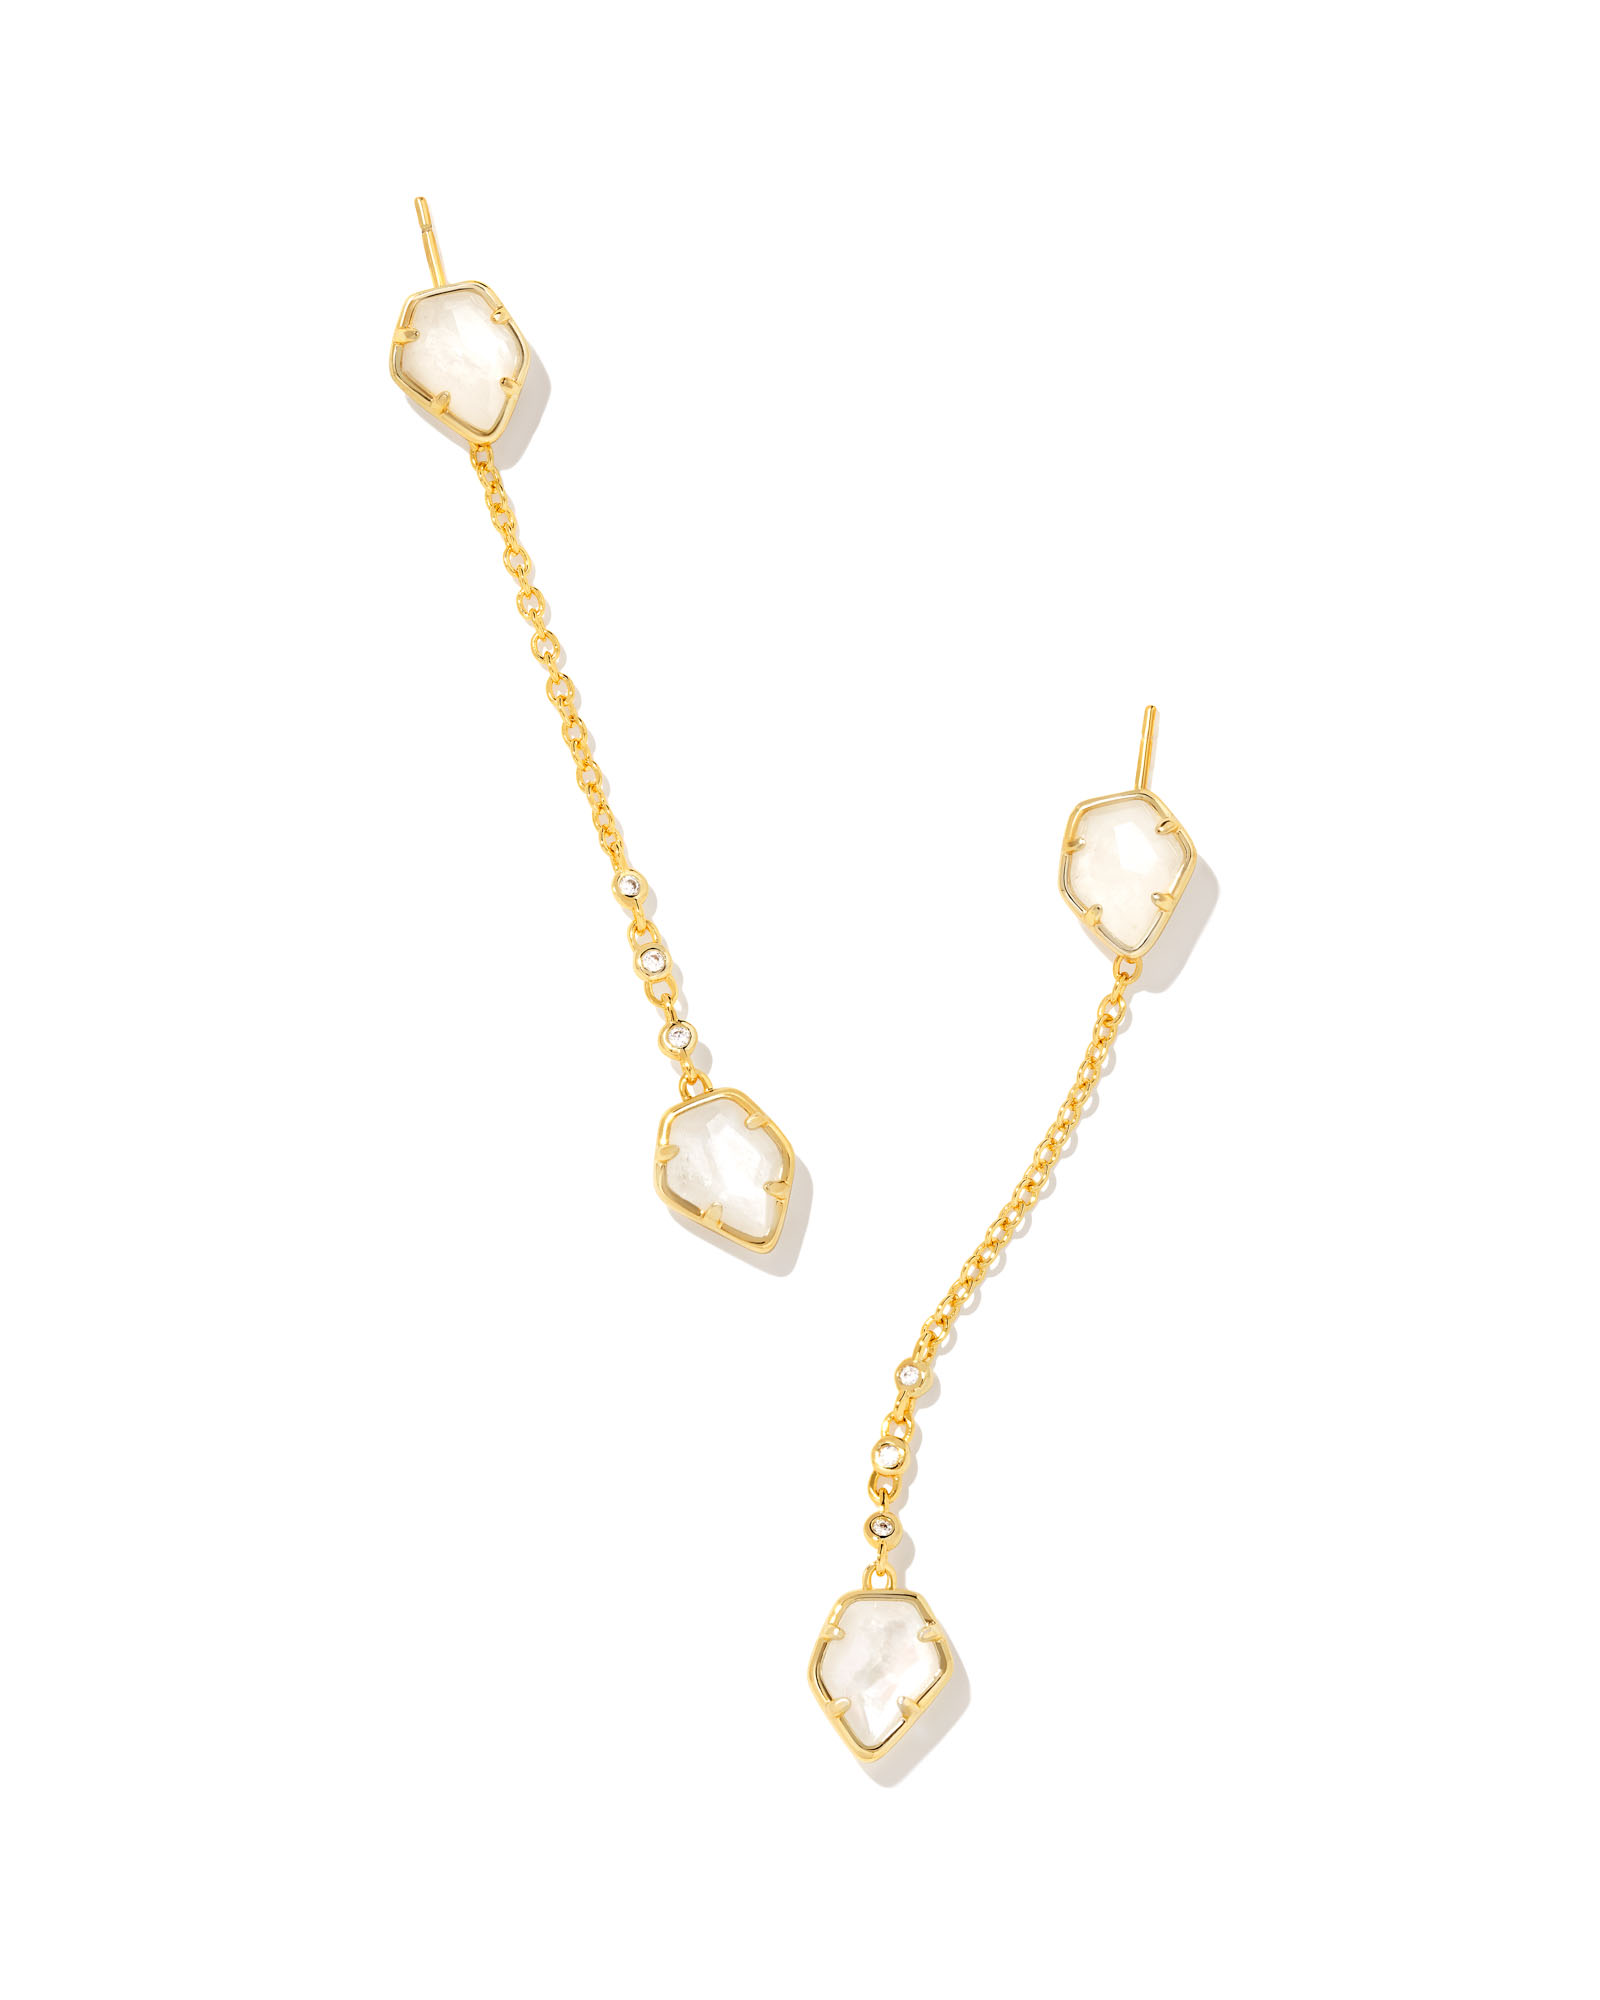 Kendra Scott Tess Pendant Necklace - Gold/Iridescent Drusy • Price »